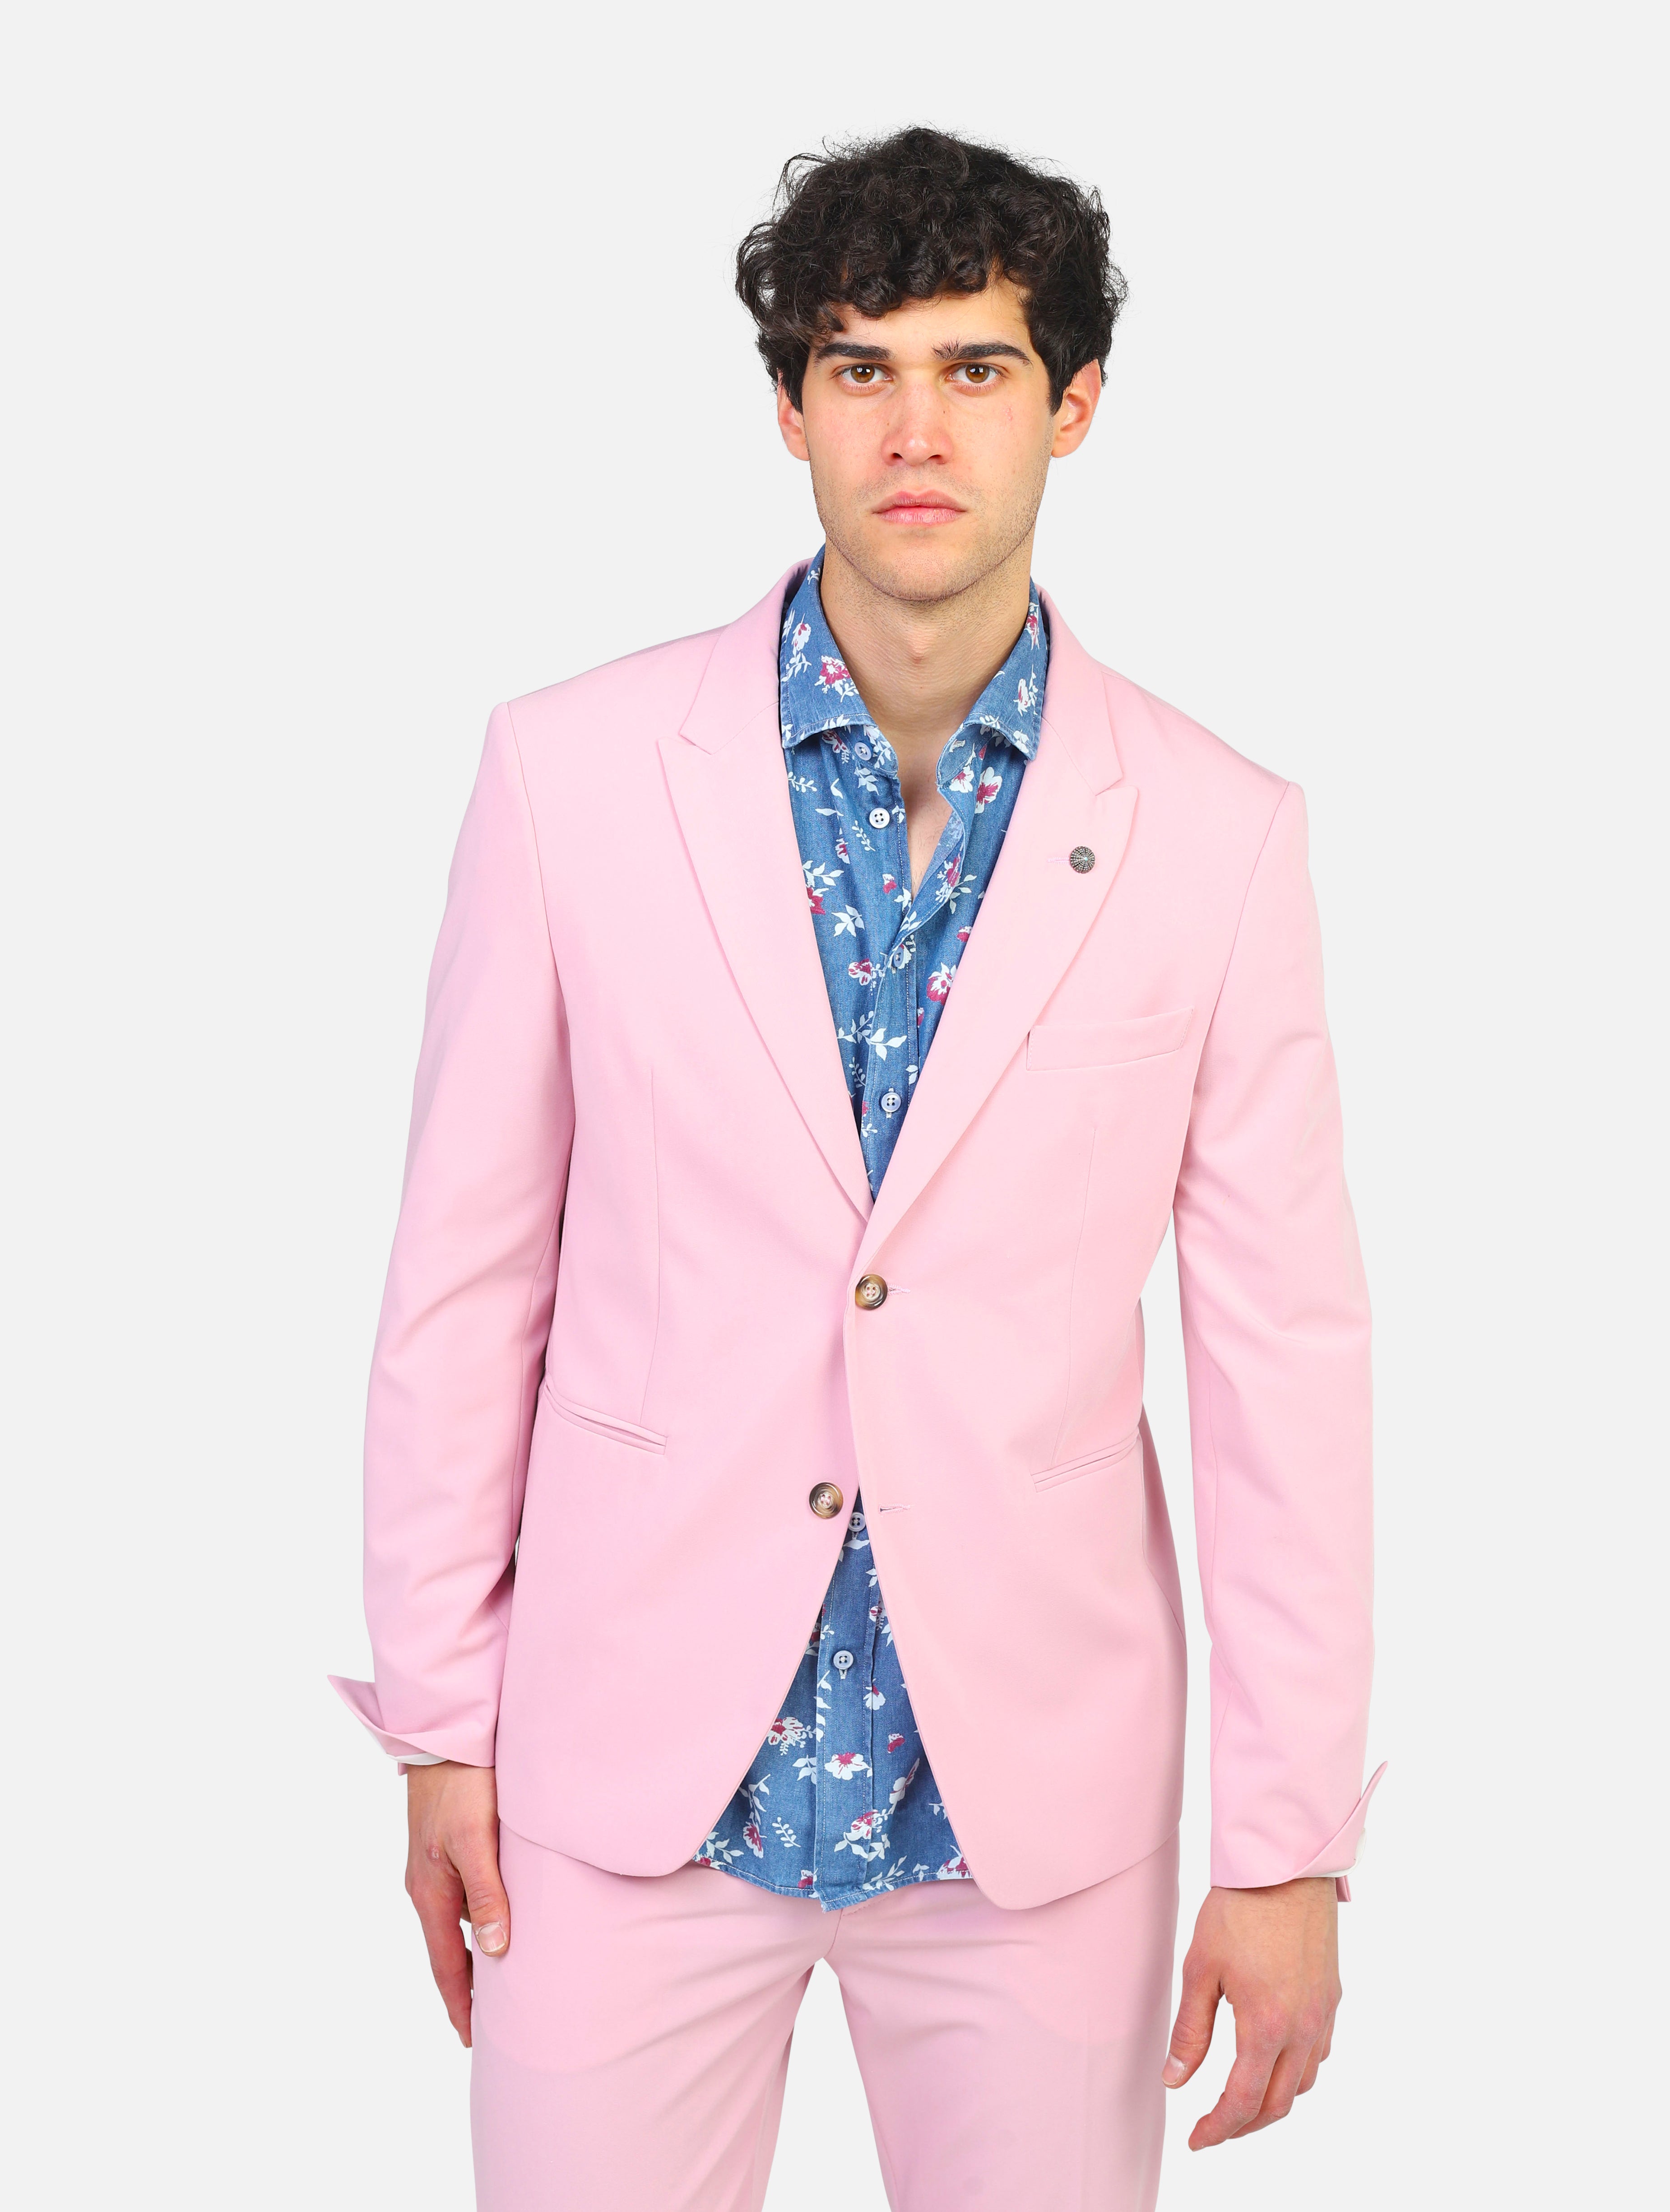 Giacca con pantalone officina 36 - 9001 alexis rosa rosa man  - 2